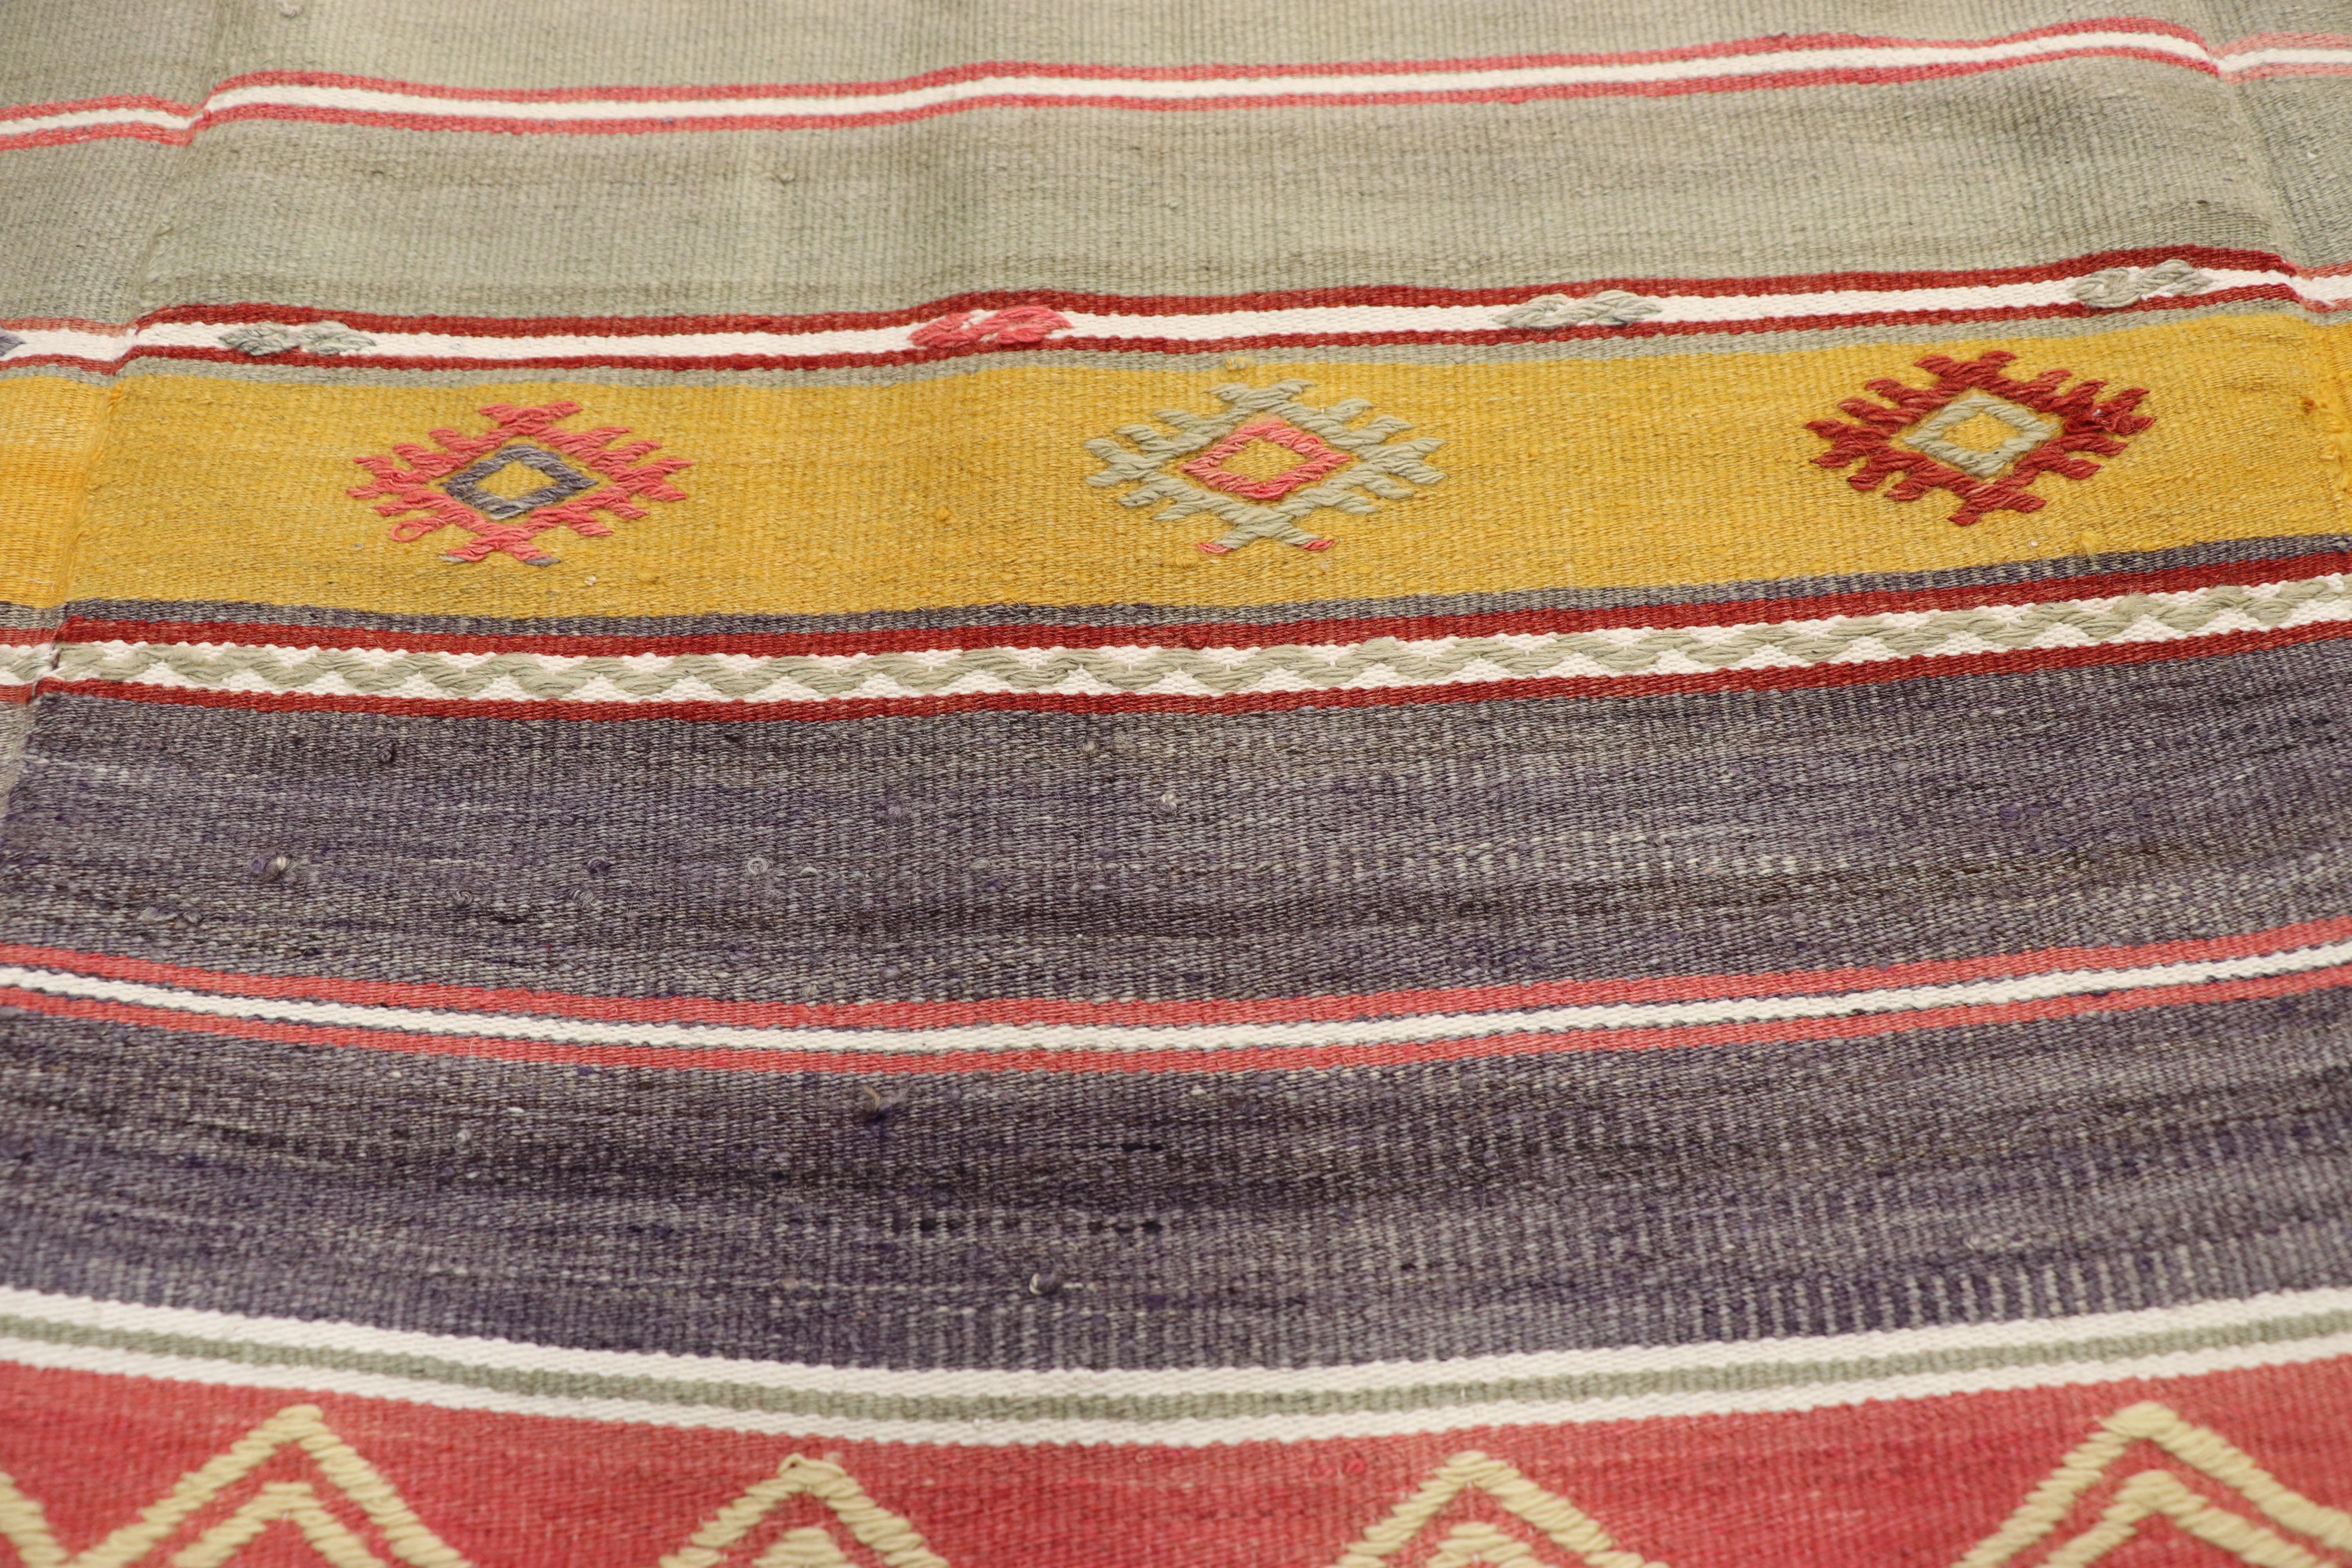 20th Century Boho Chic Vintage Turkish Kilim Rug, Flat-Weave Rug with Tribal Style